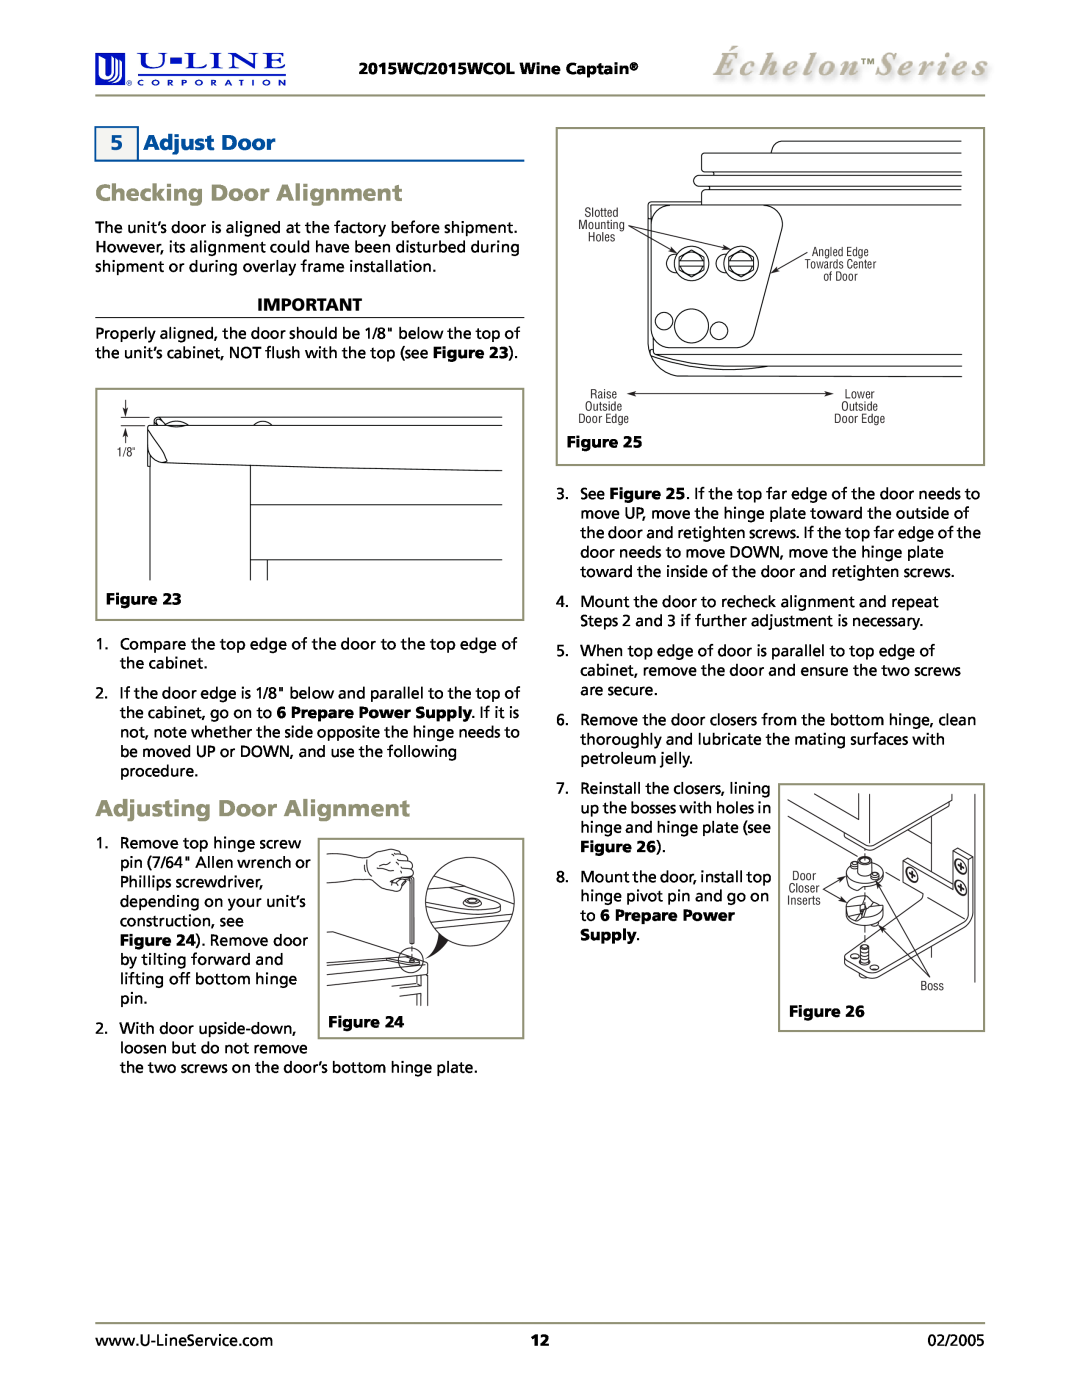 U-Line manual Checking Door Alignment, Adjusting Door Alignment, Adjust Door, 2015WC/2015WCOL Wine Captain 